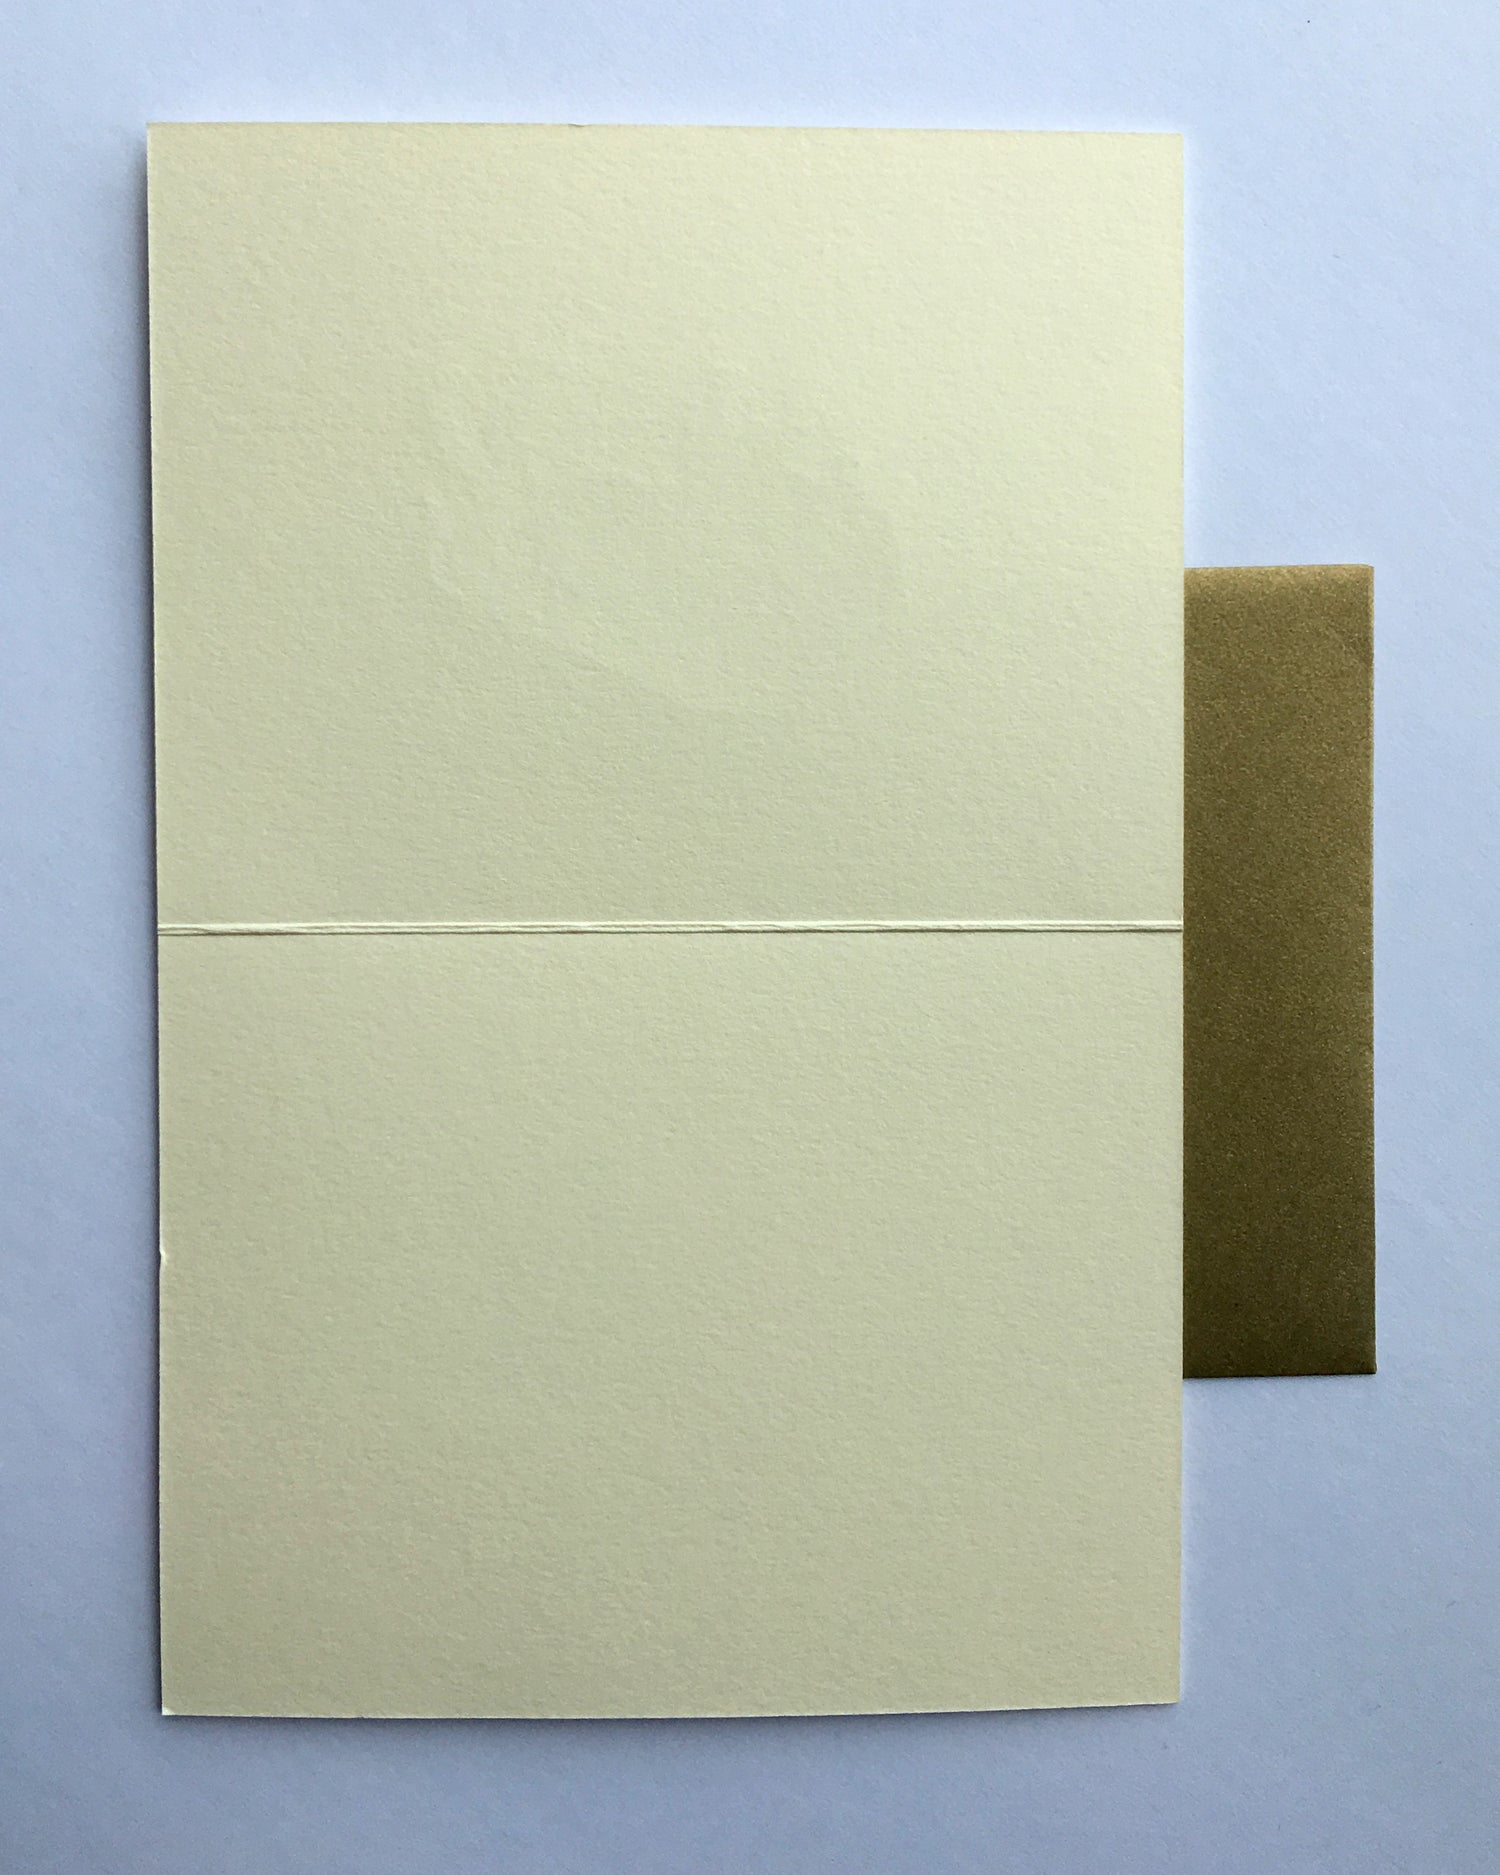 Gold foil letterpress card opened to show blank inside by Rust Belt Love